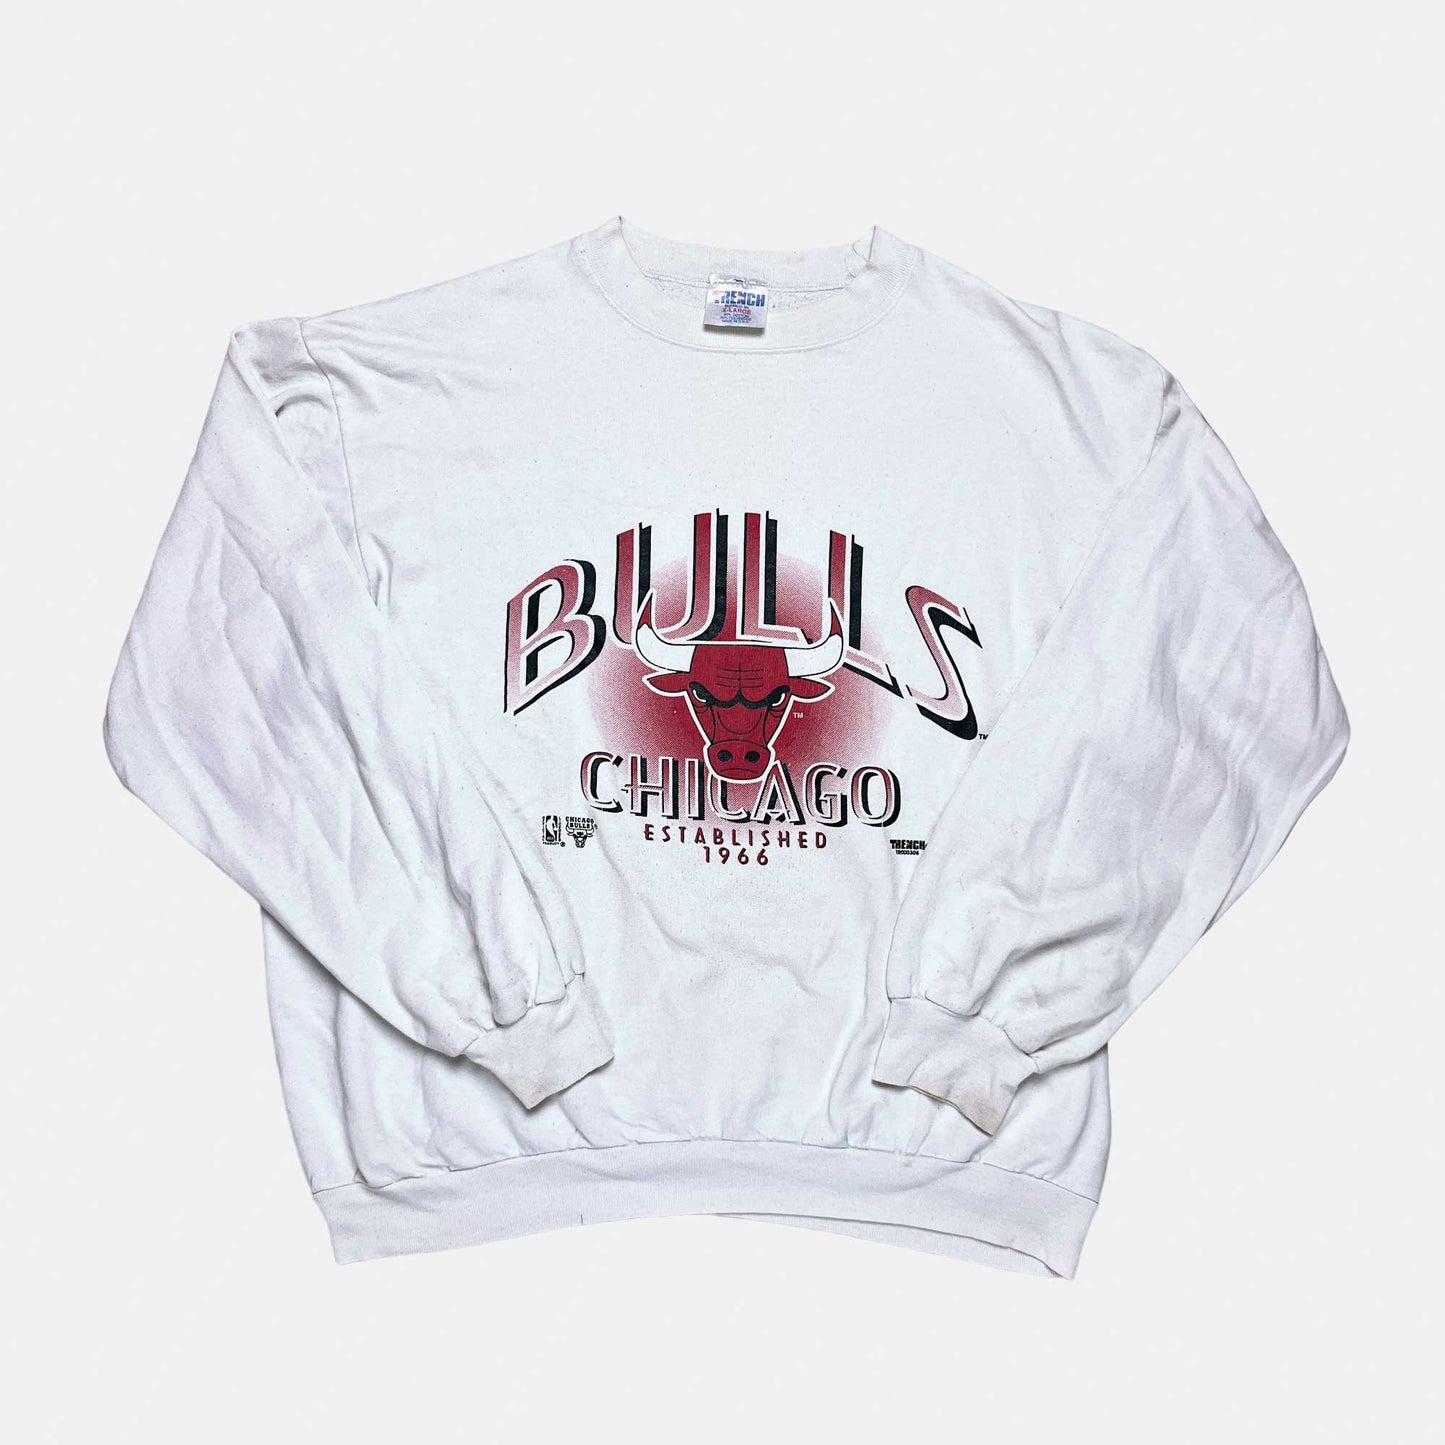 Chicago Bulls - Established 1966 - Größe XL - Trench NBA Sweatshirt